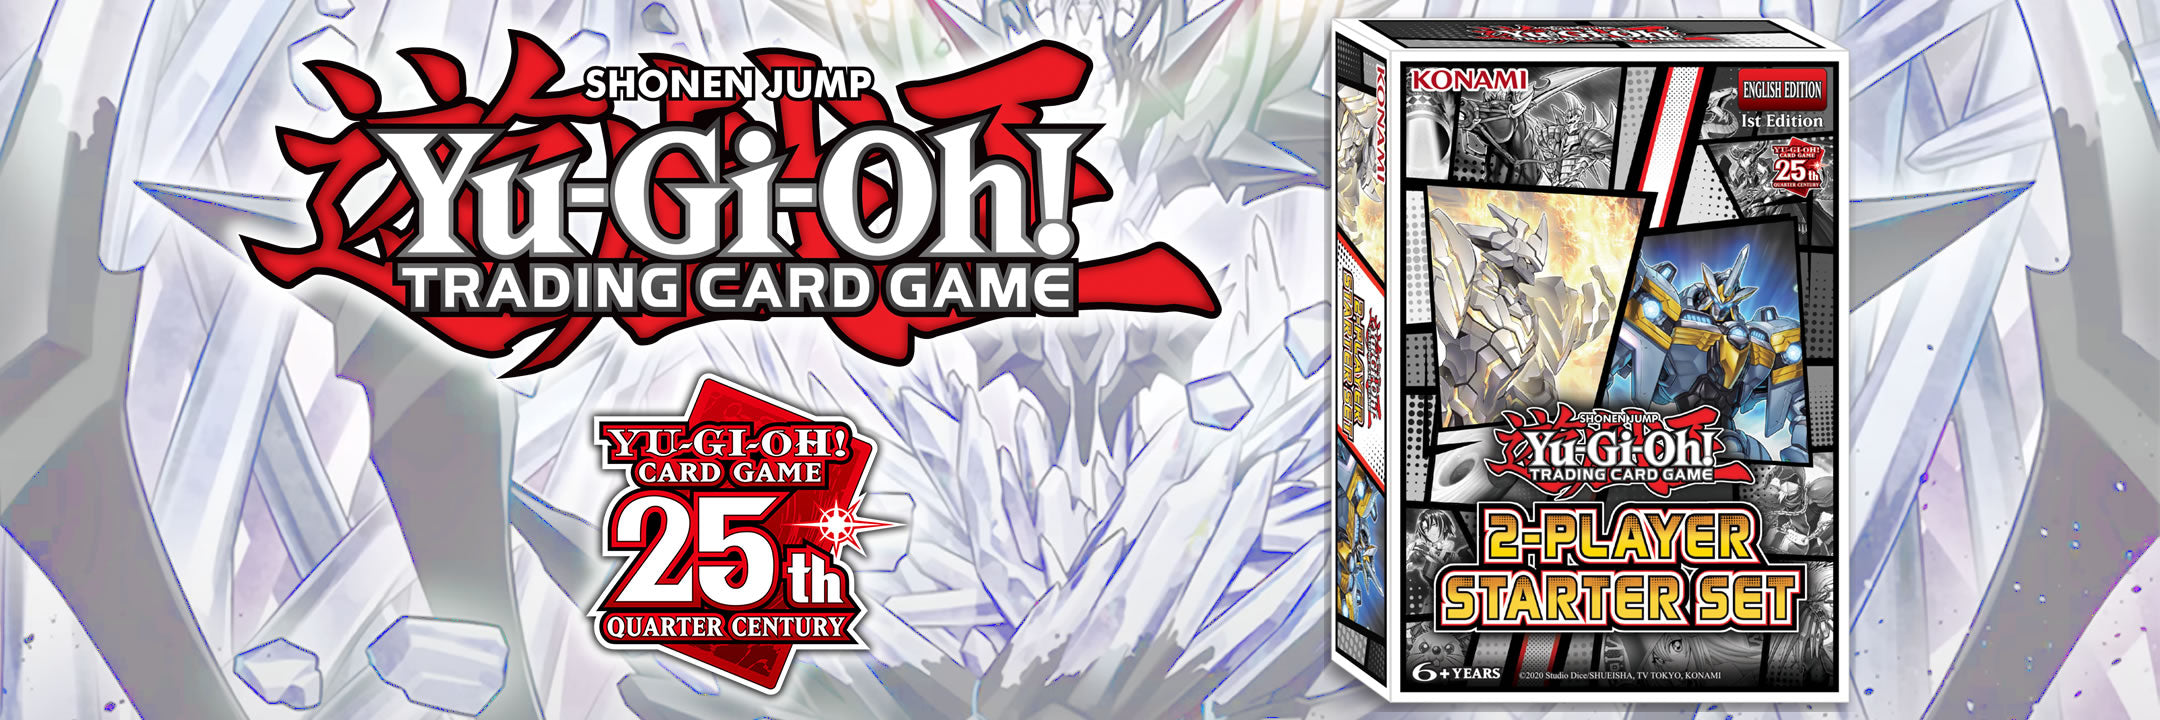 Yu-Gi-Oh! Trading Card Game - TCG 2 - Player Starter Set